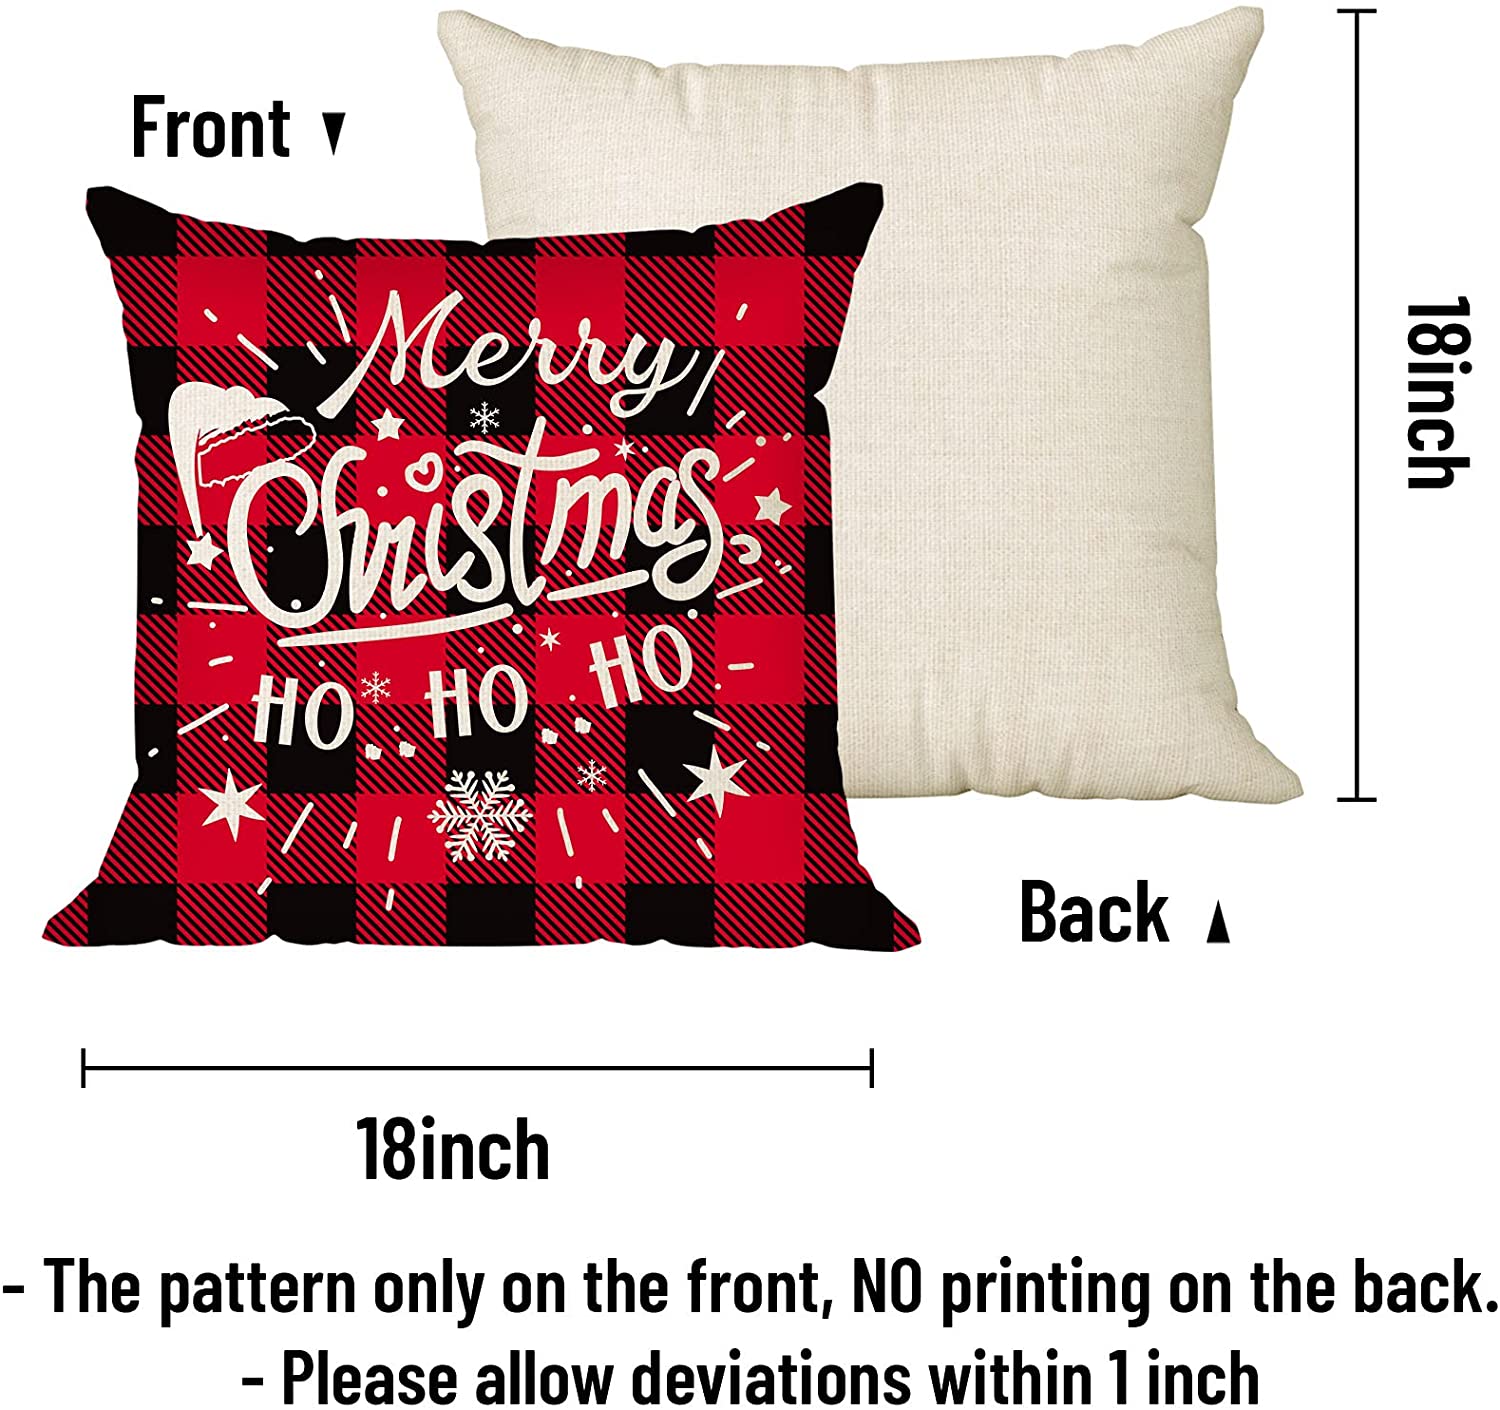 Set of 4 Buffalo Plaid Christmas Pillow Covers 18 x 18 with 4 Bonus Coasters (Truck, Reindeer)